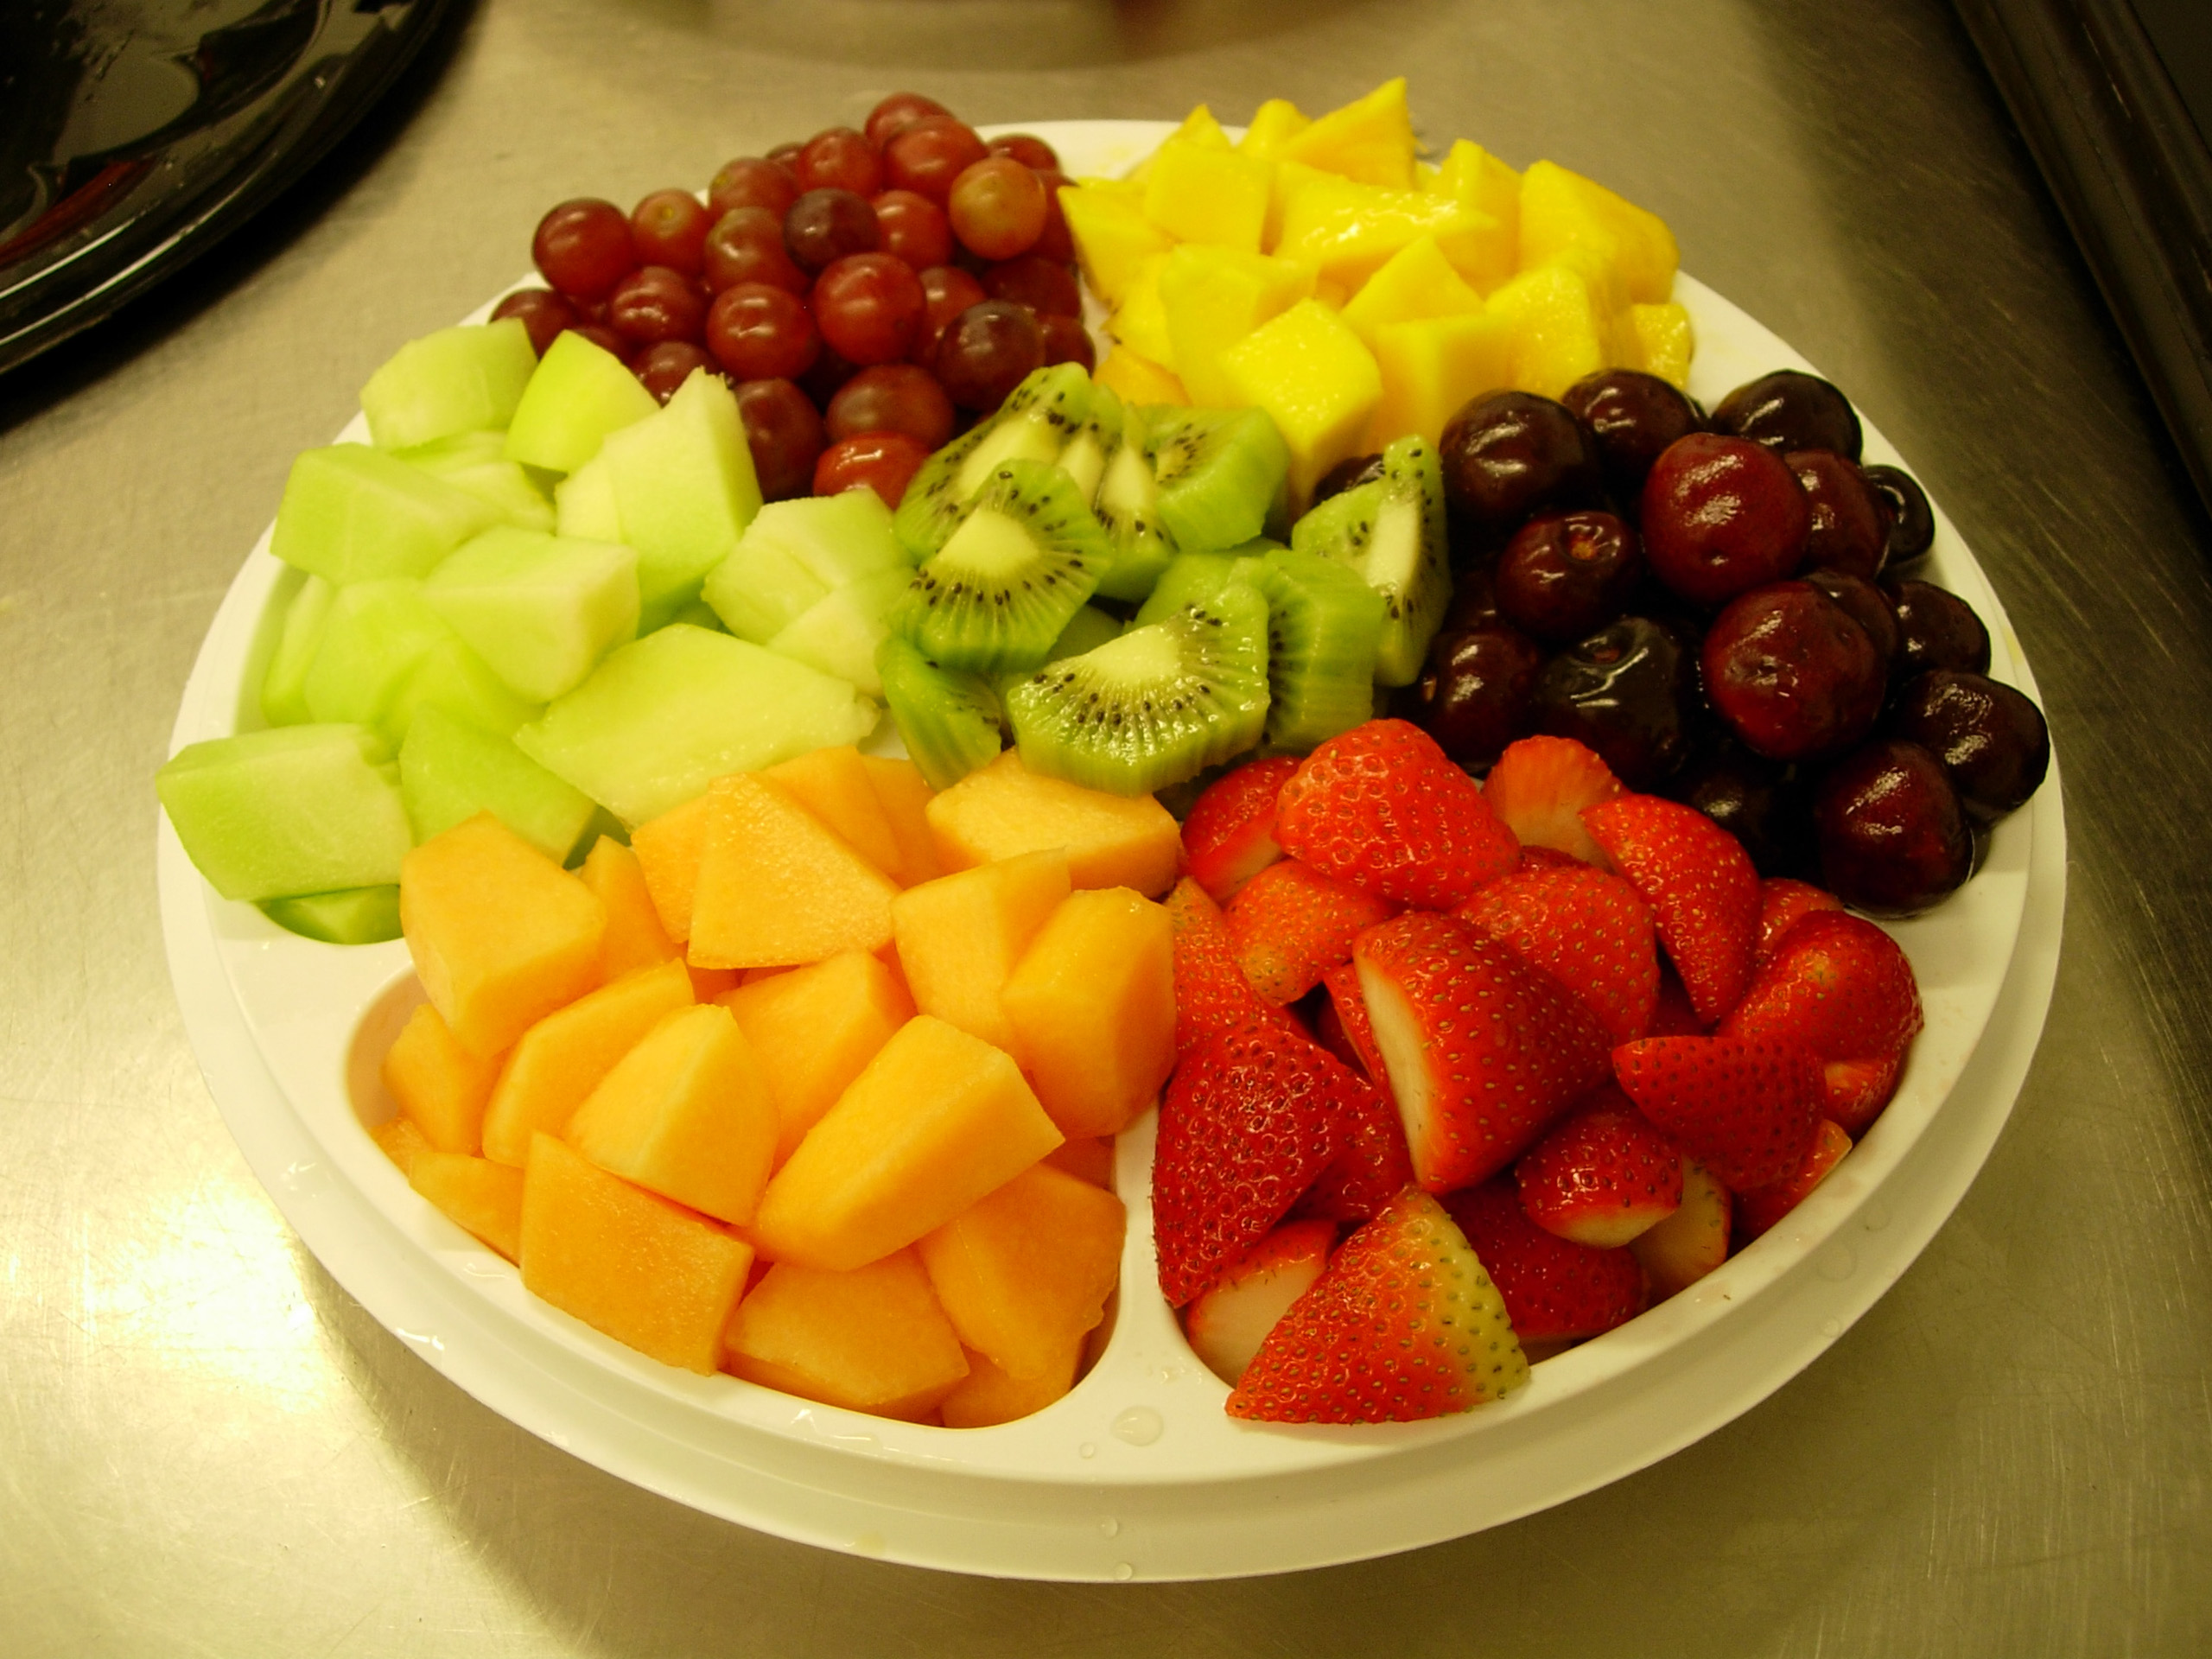 Hasil gambar untuk buah buahan dalam piring